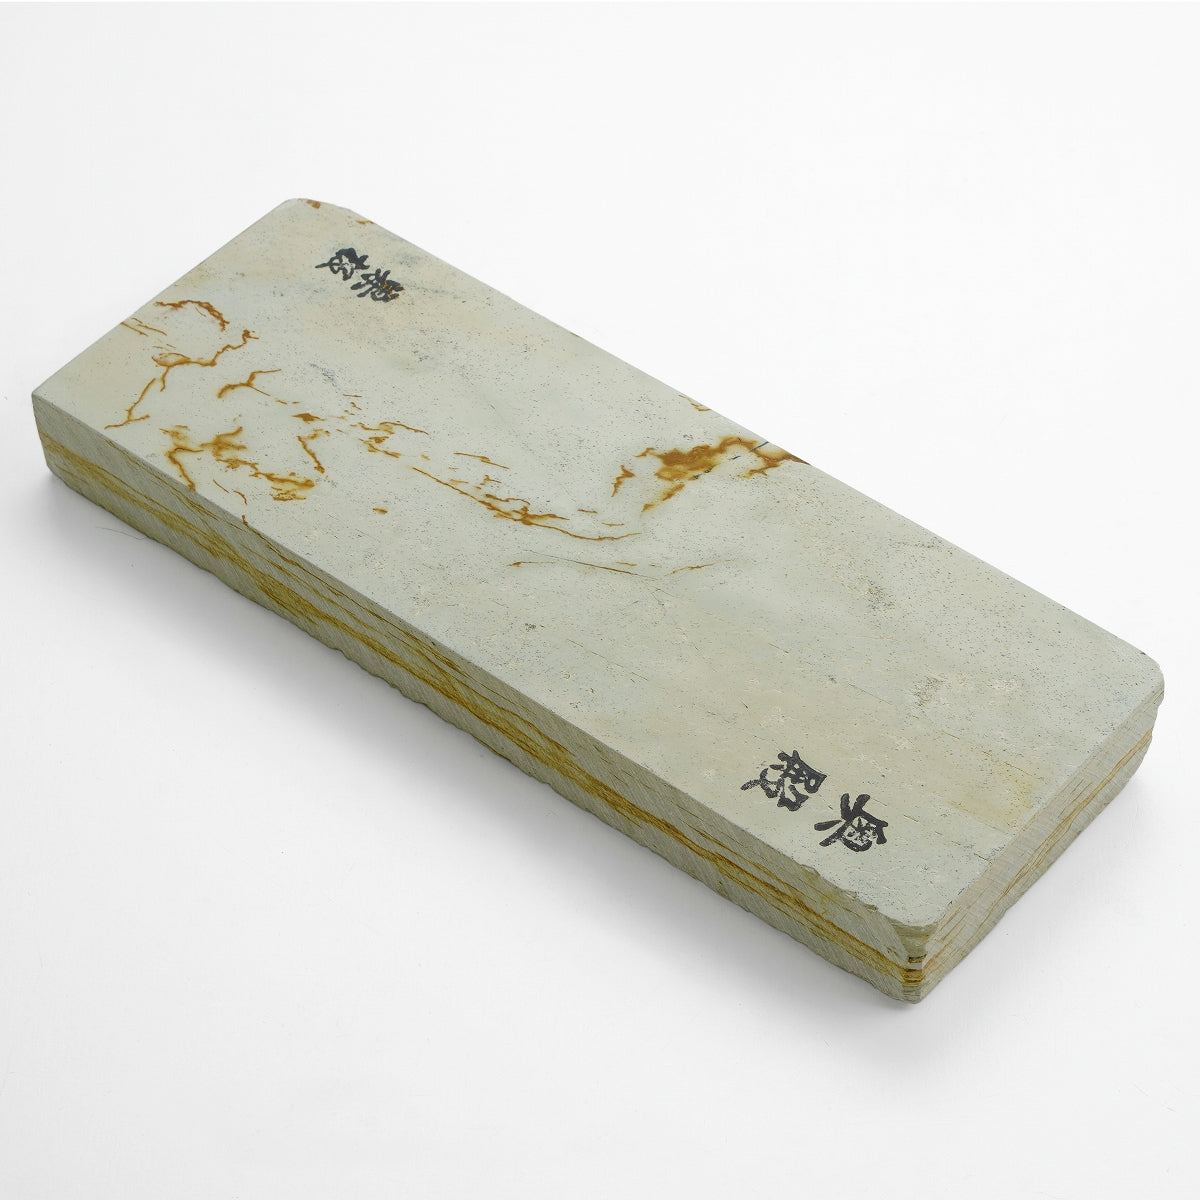 "OKUDO", Tennen Toishi (Japanese Natural Stone). Ground layer "SUITA" 900g